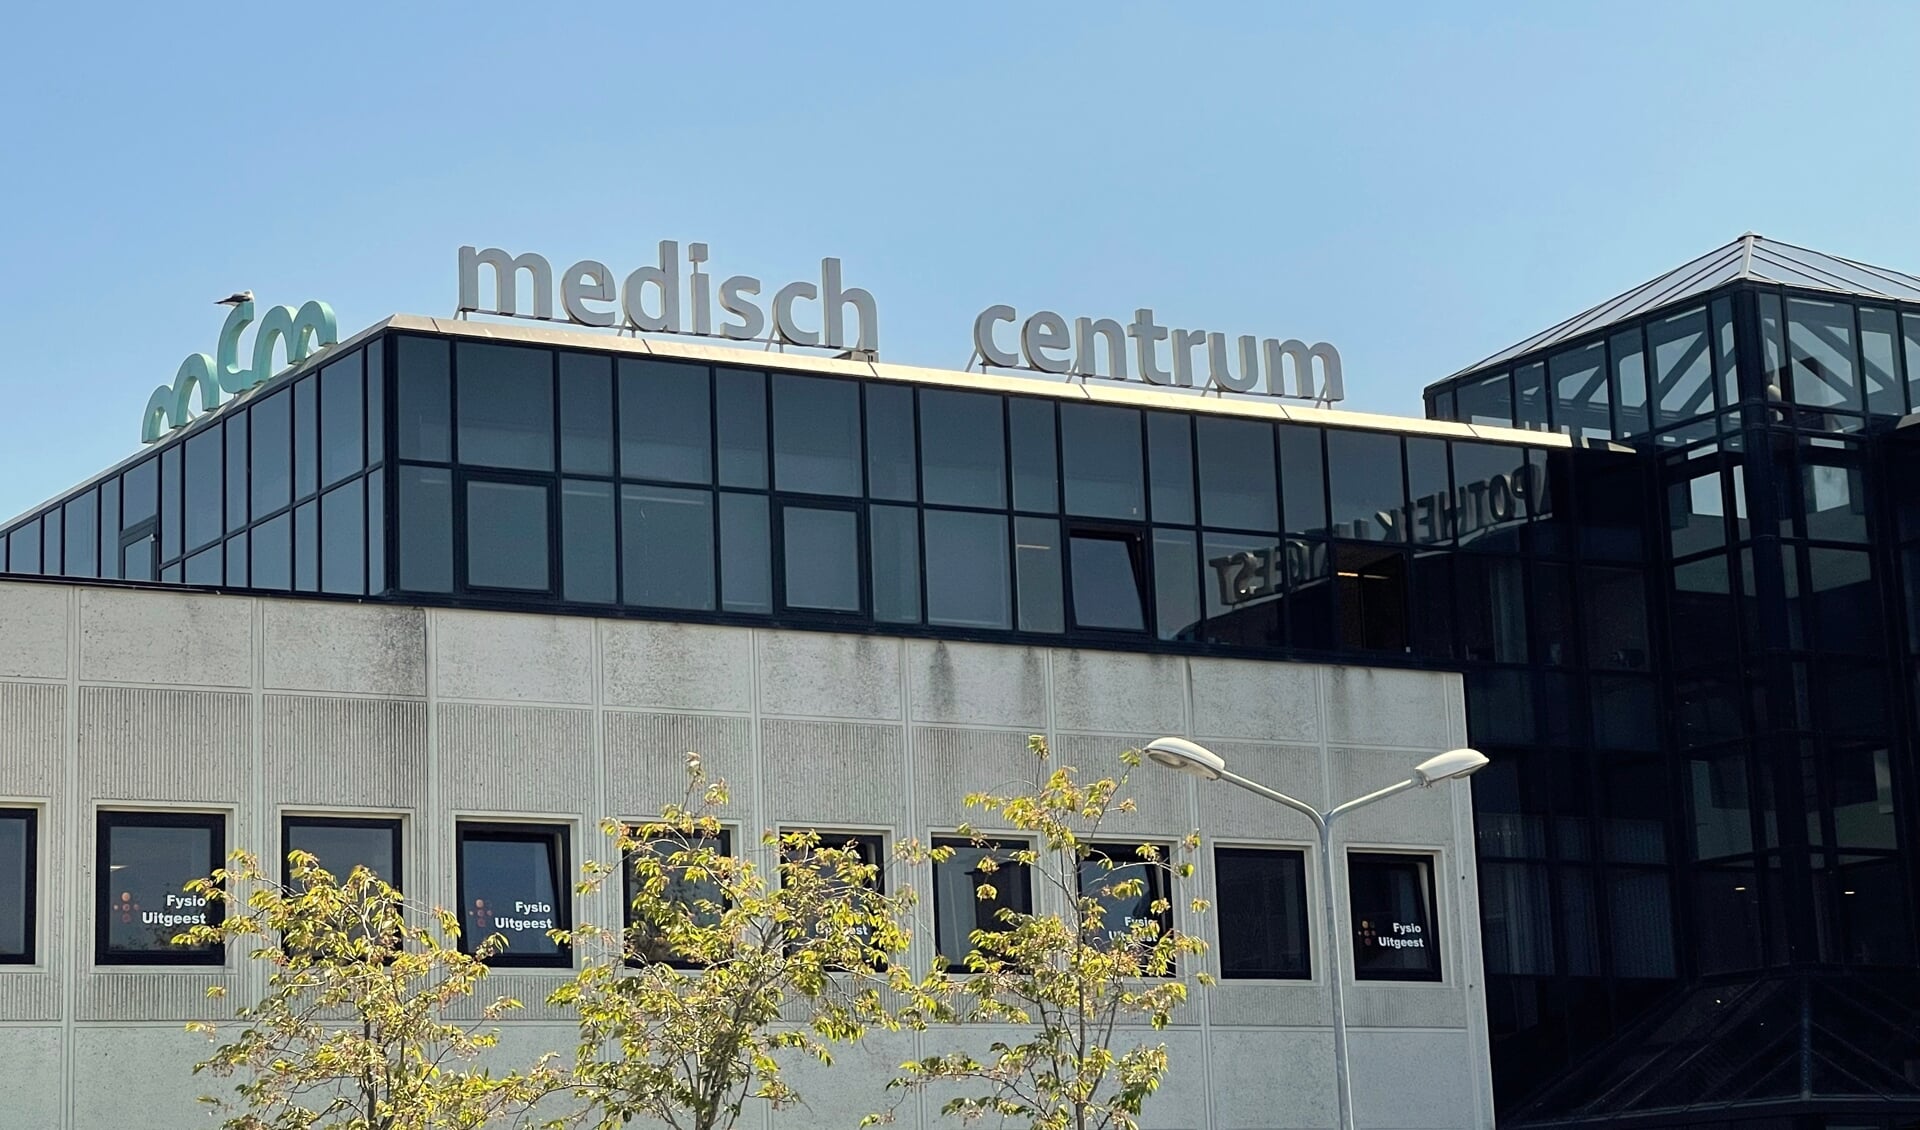 Medisch Centrum Molenstraat (MCM)